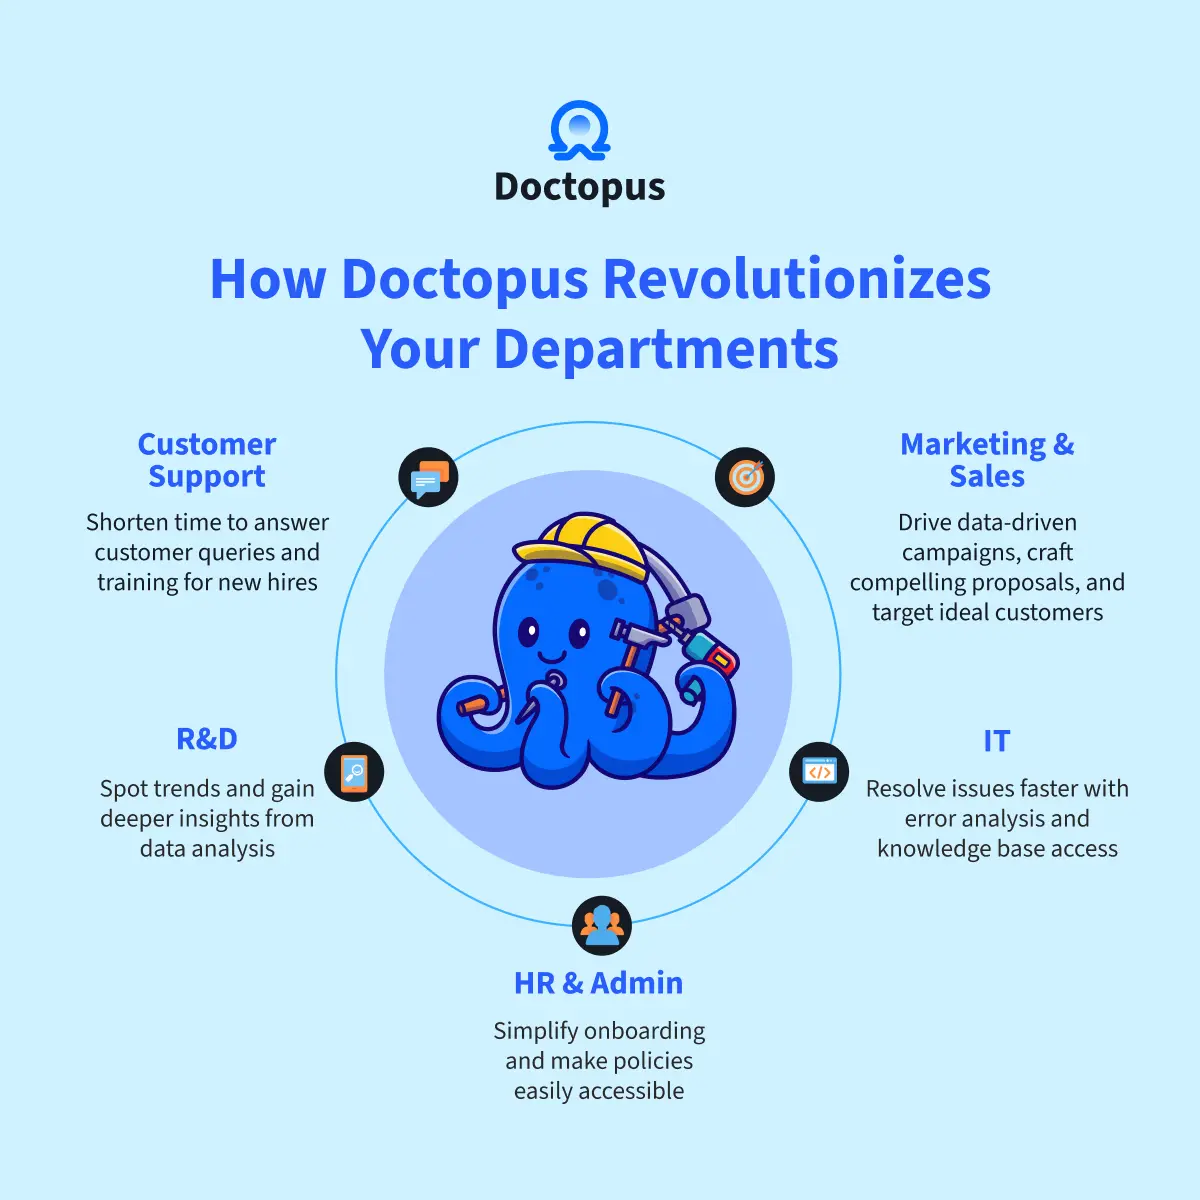 How Doctopus revolutionizes your departments